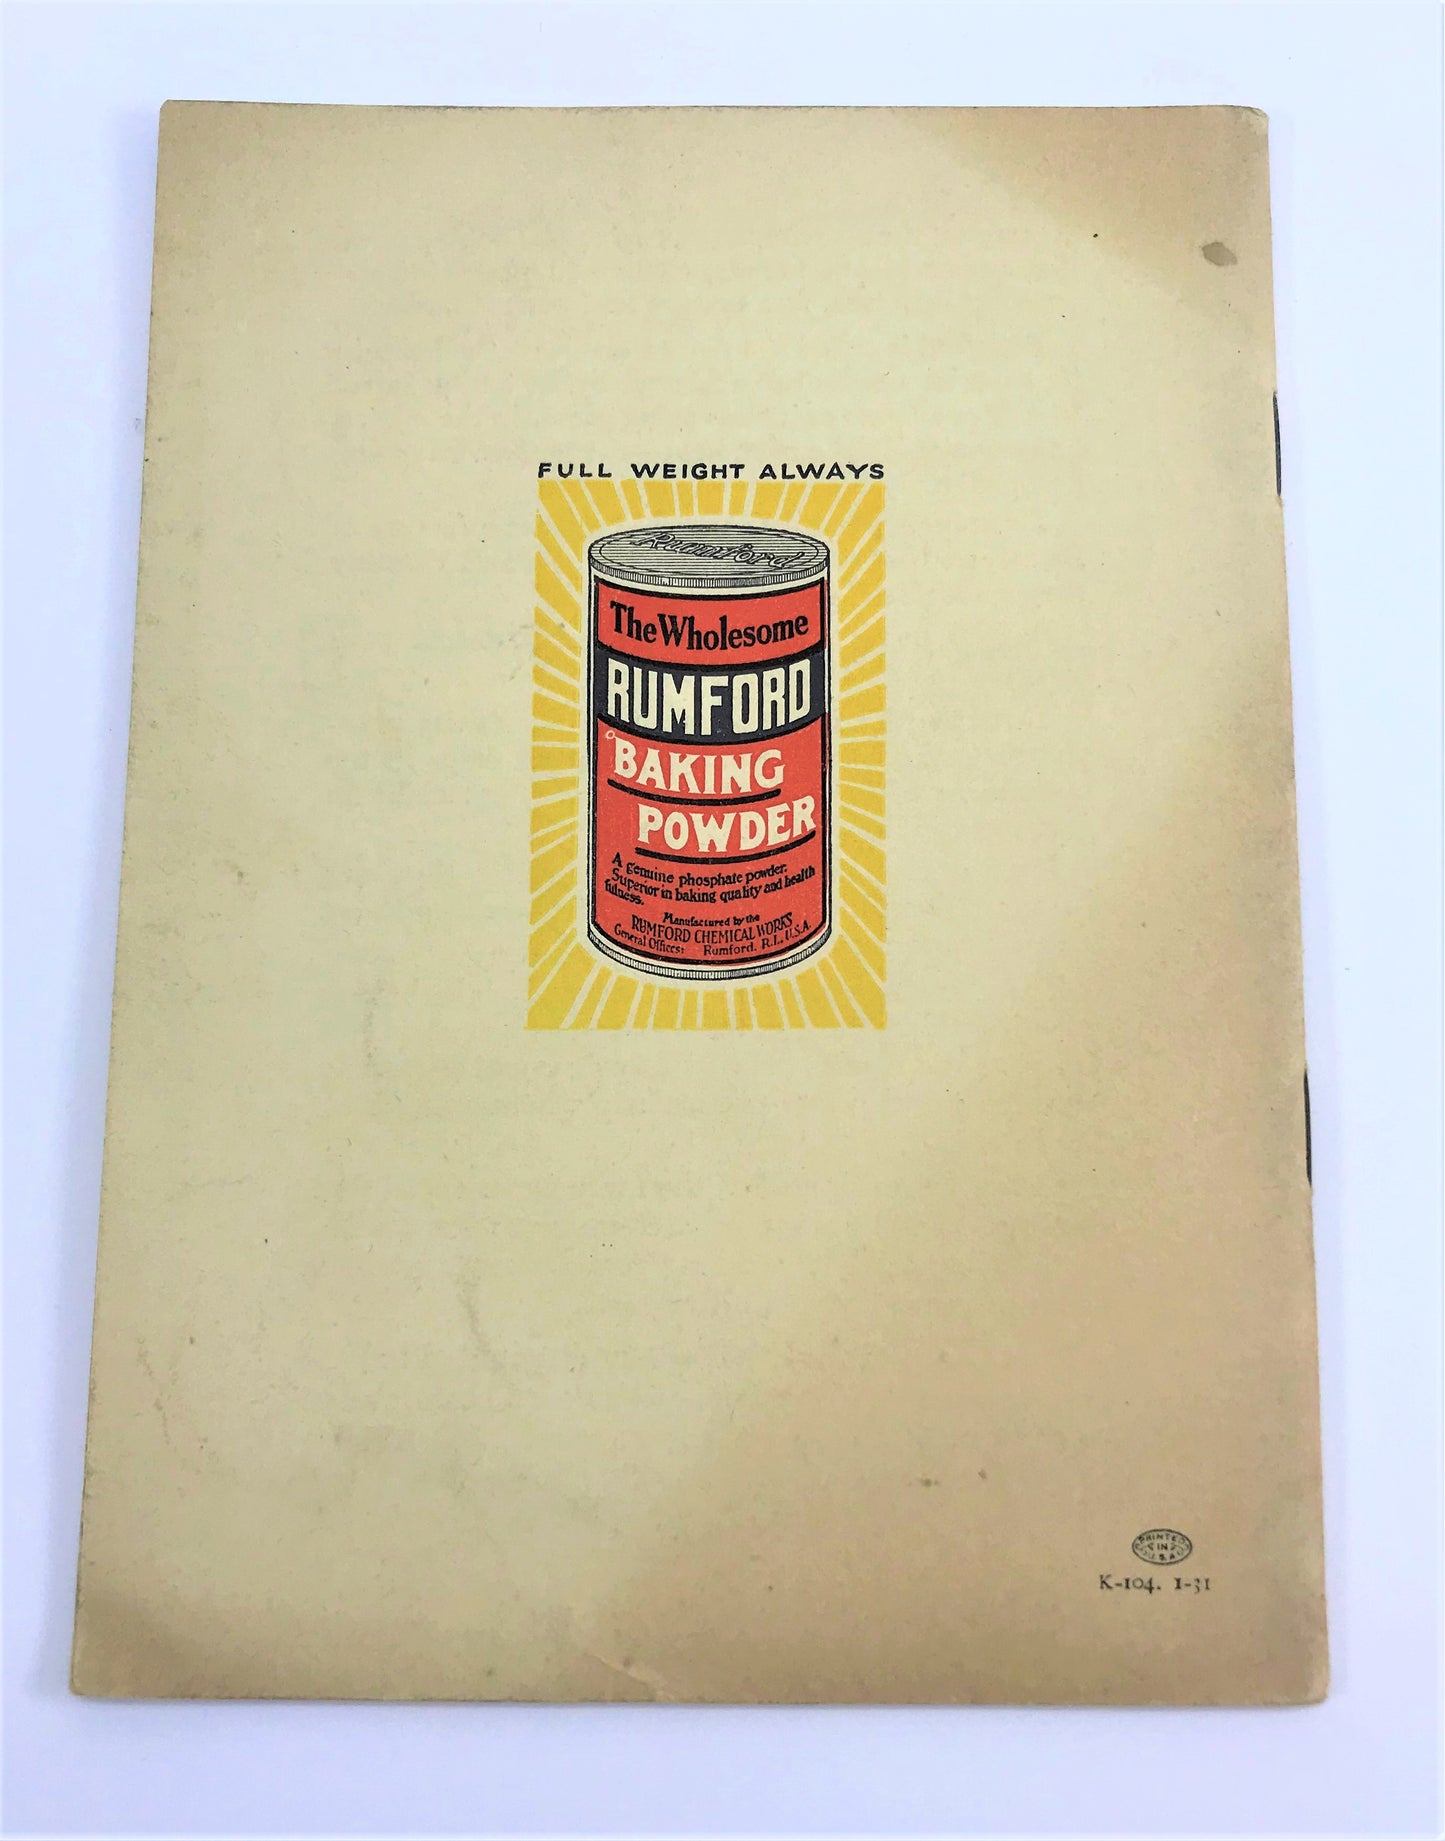 Rumford Baking Powder Recipe Cookbooklet, 1931